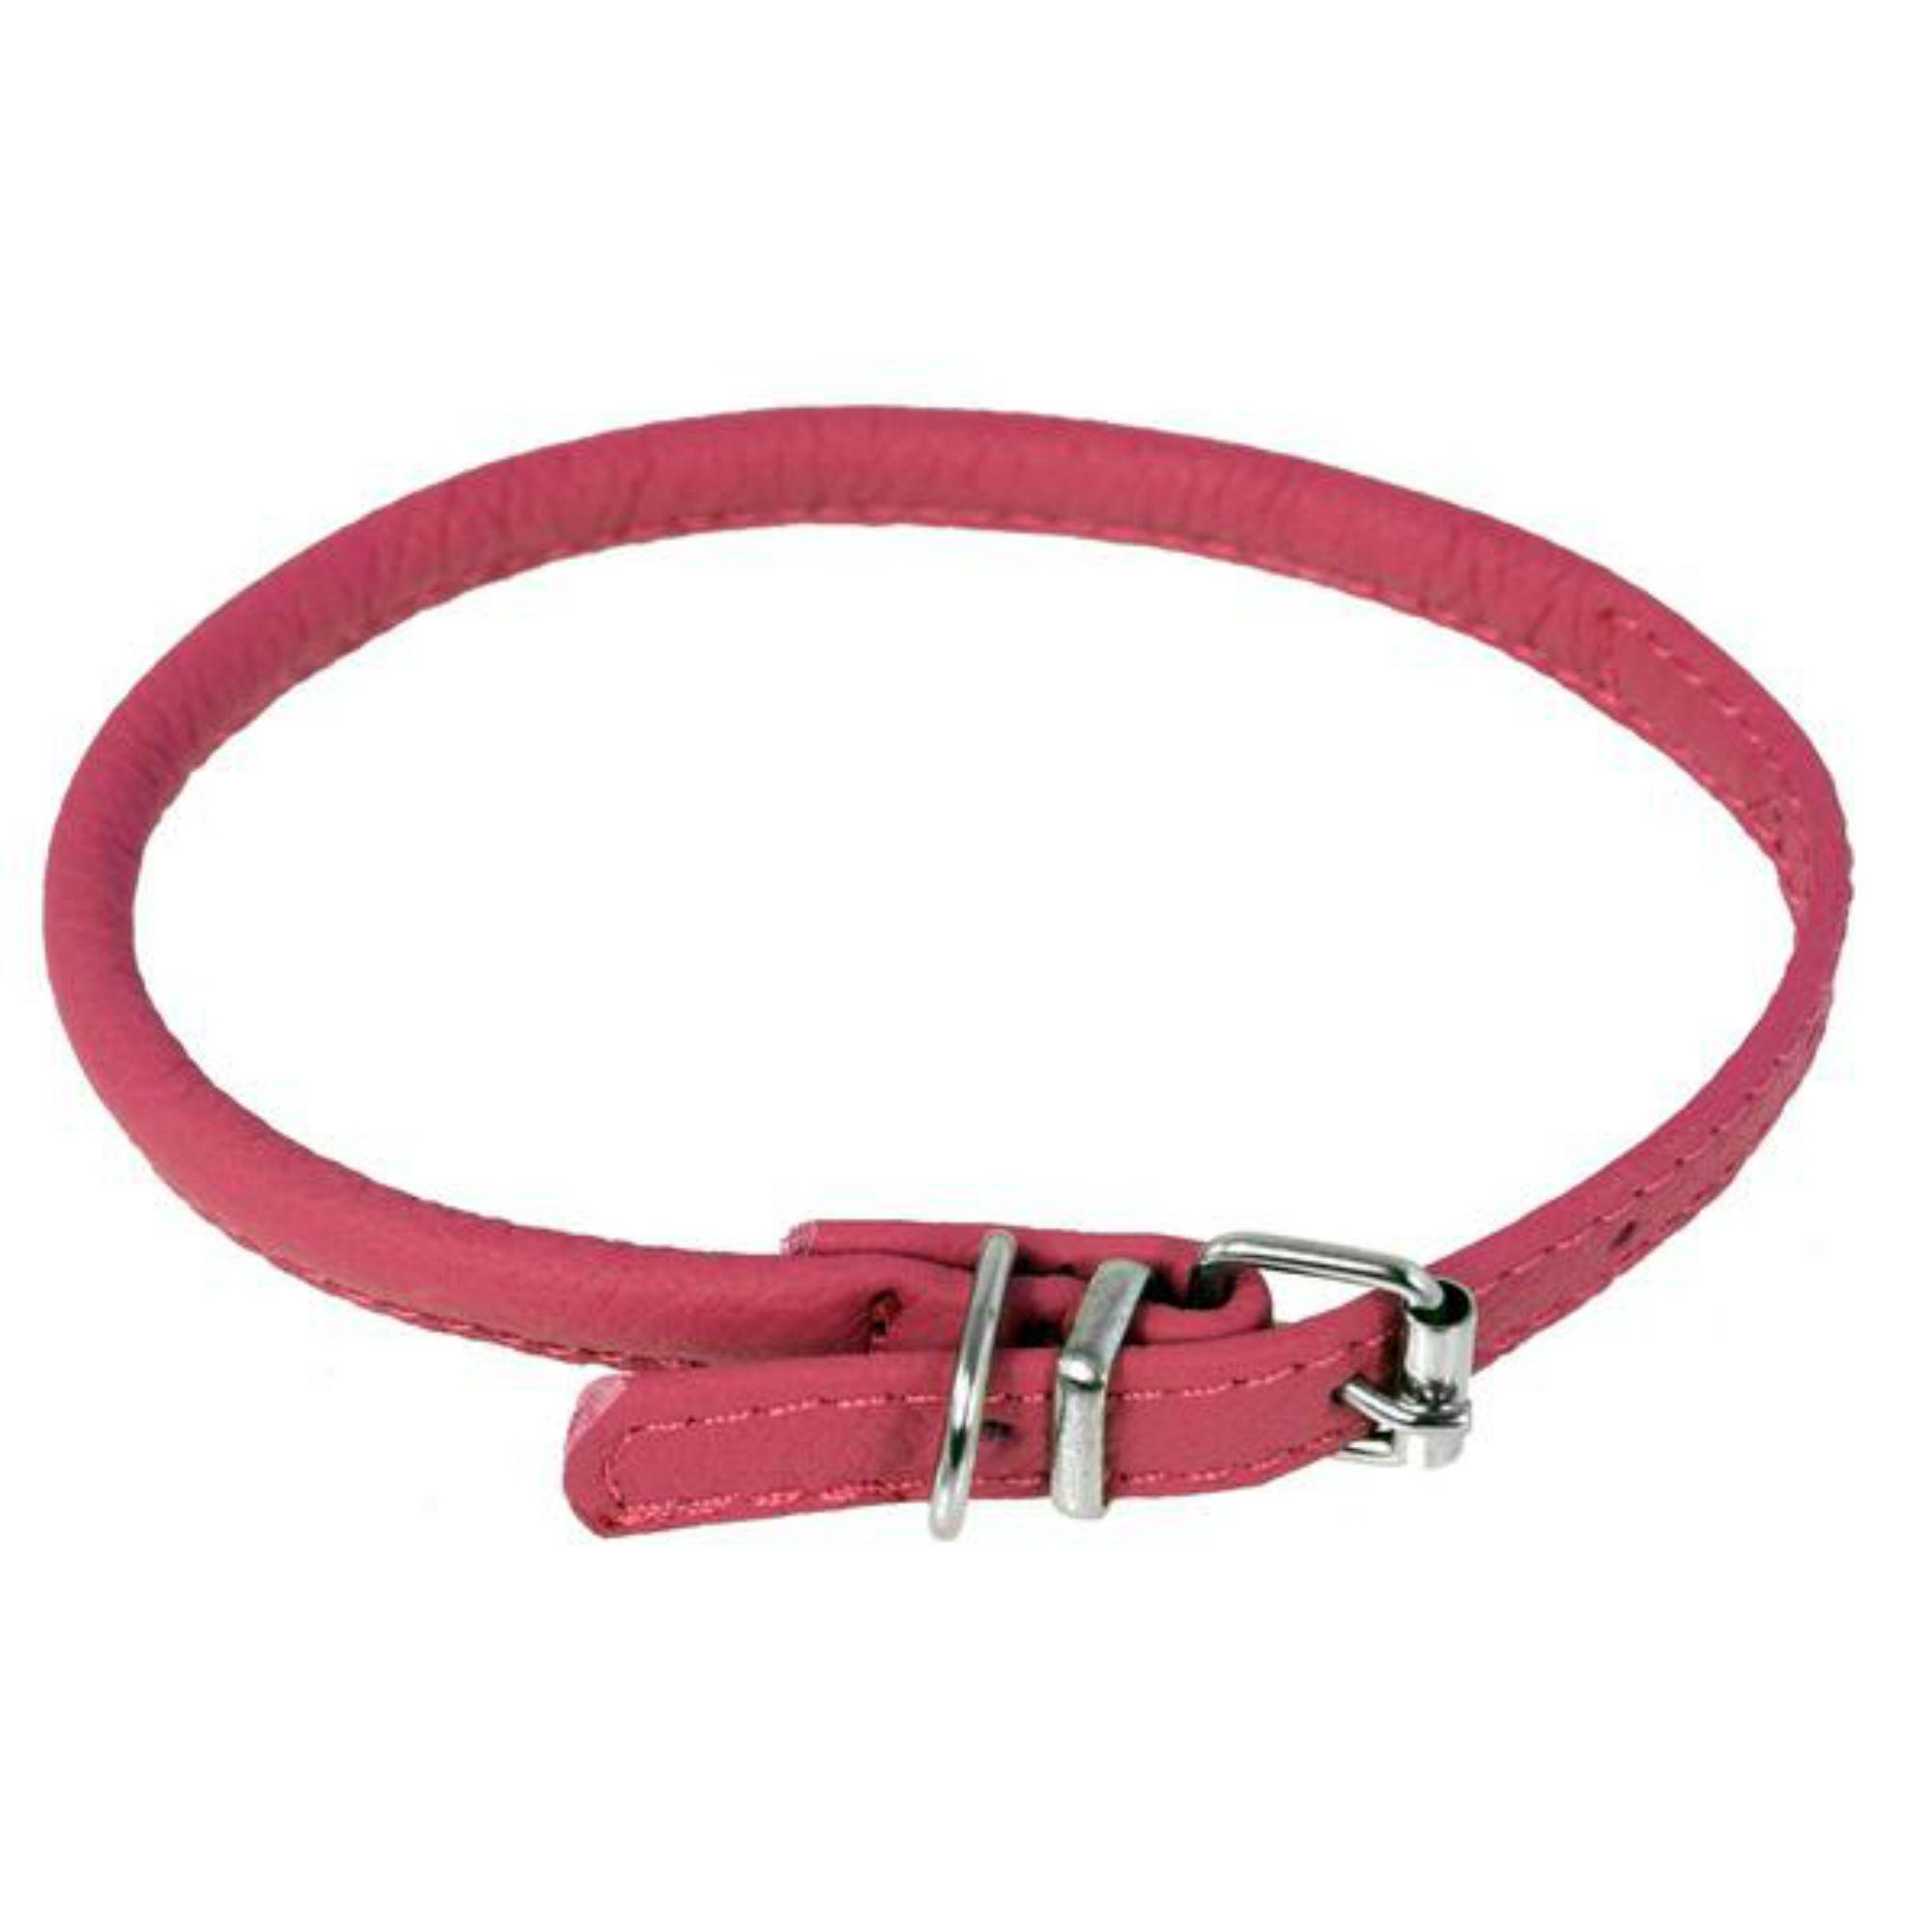 Dogline Soft Leather Round Dog Collar - Hot Pink